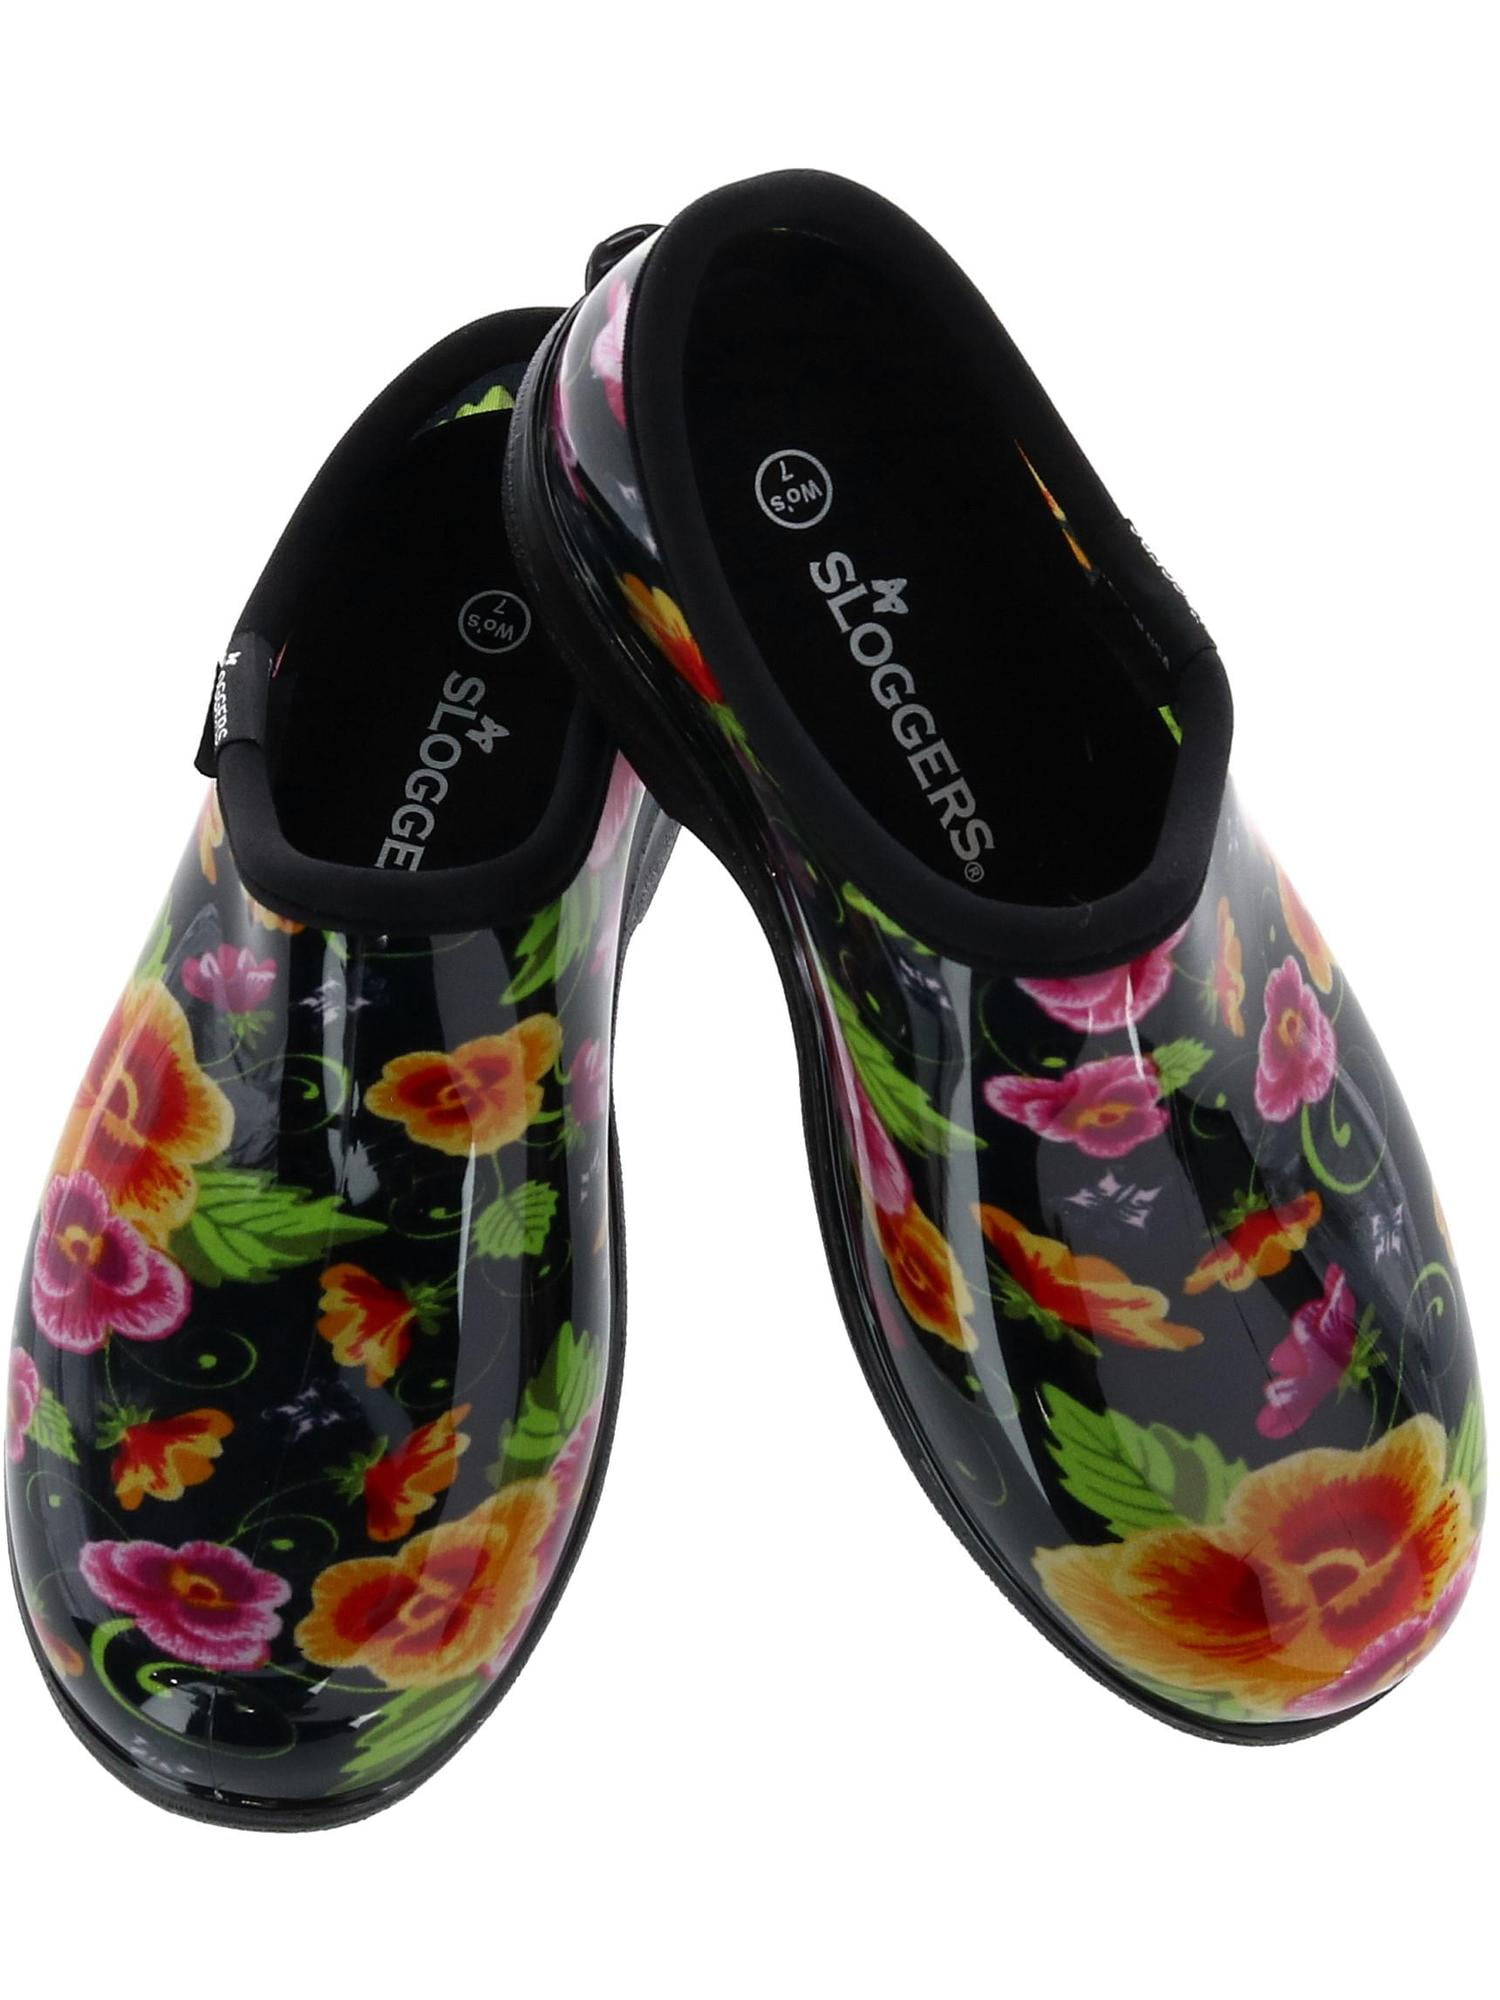 Sloggers  Flower Power  Women's  Garden/Rain Shoes  10 US  Black 